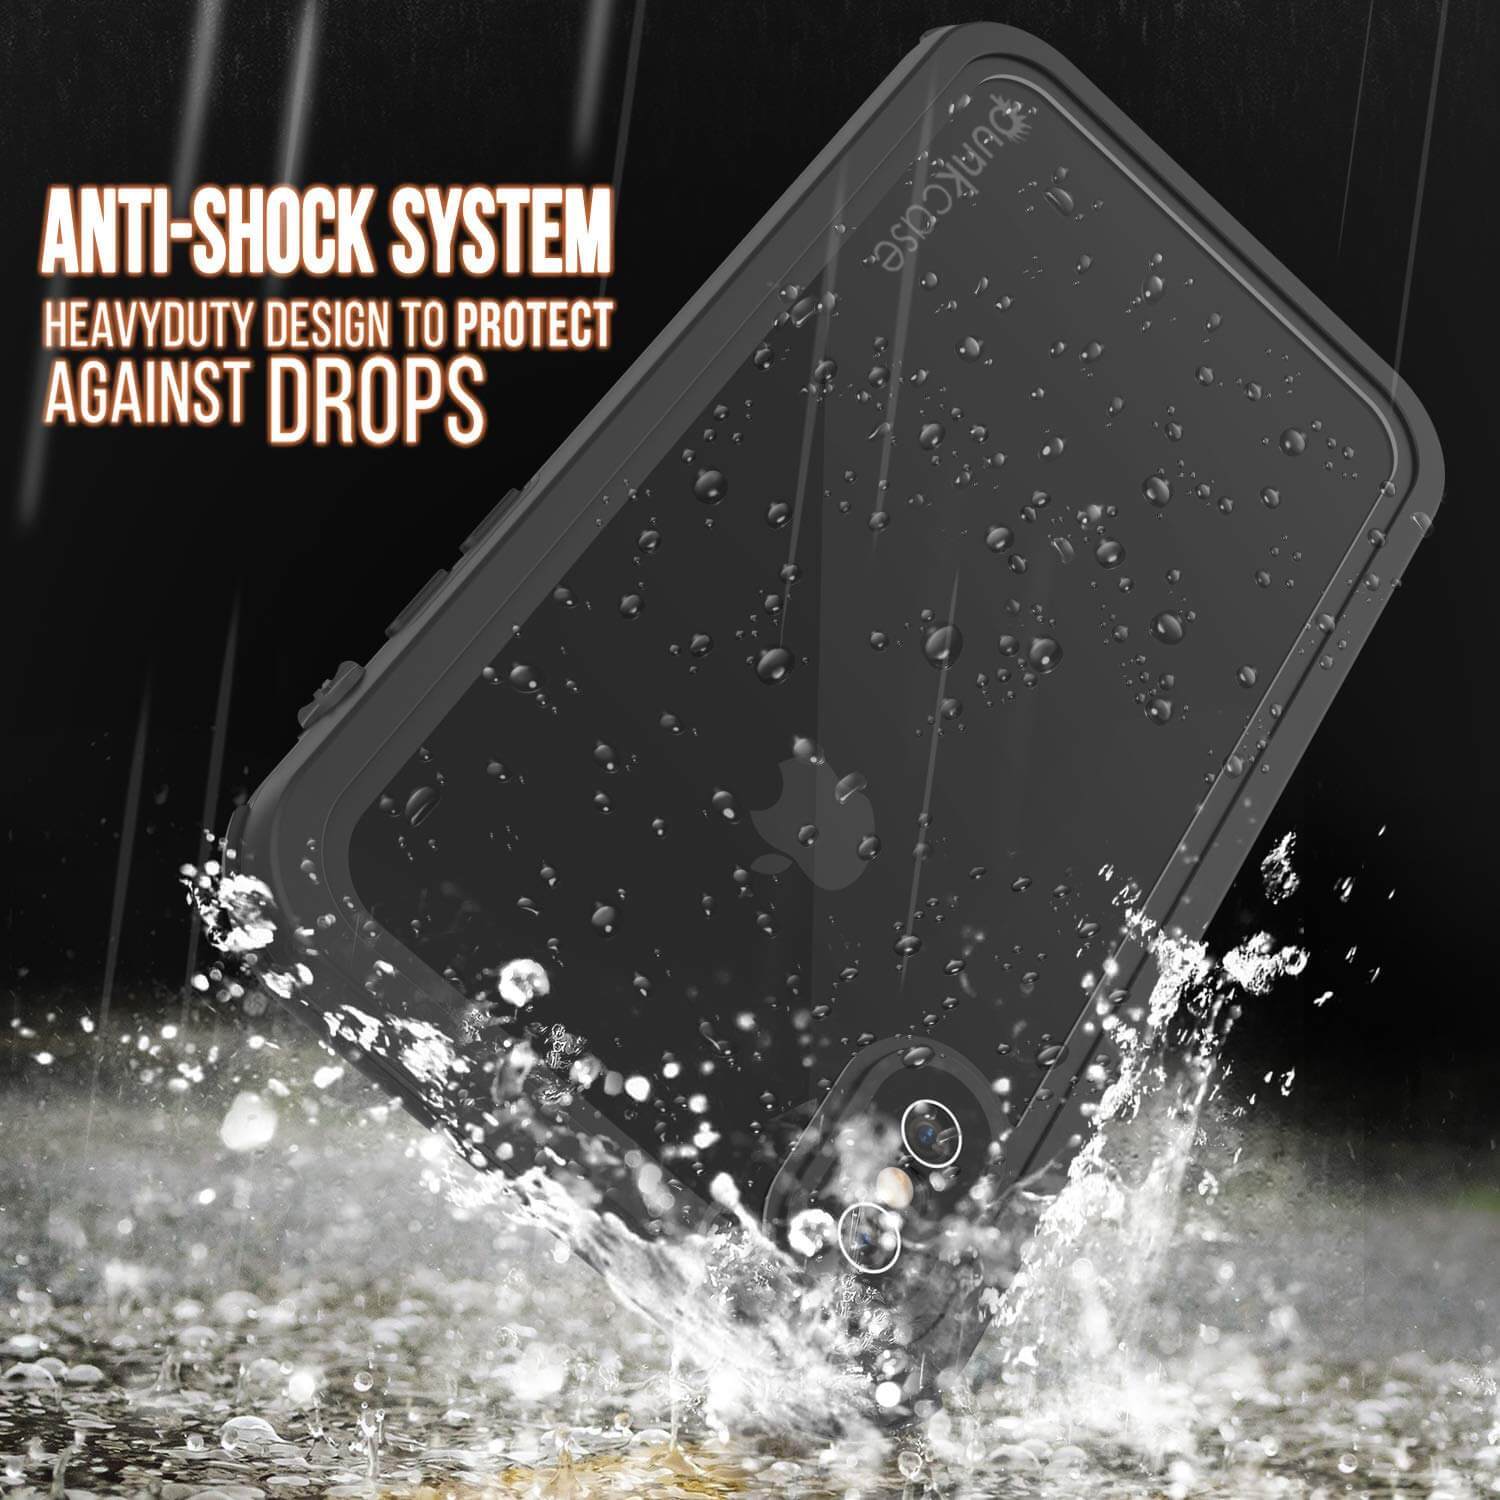 iPhone XS Waterproof IP68 Case, Punkcase [red] [Rapture Series]  W/Built in Screen Protector